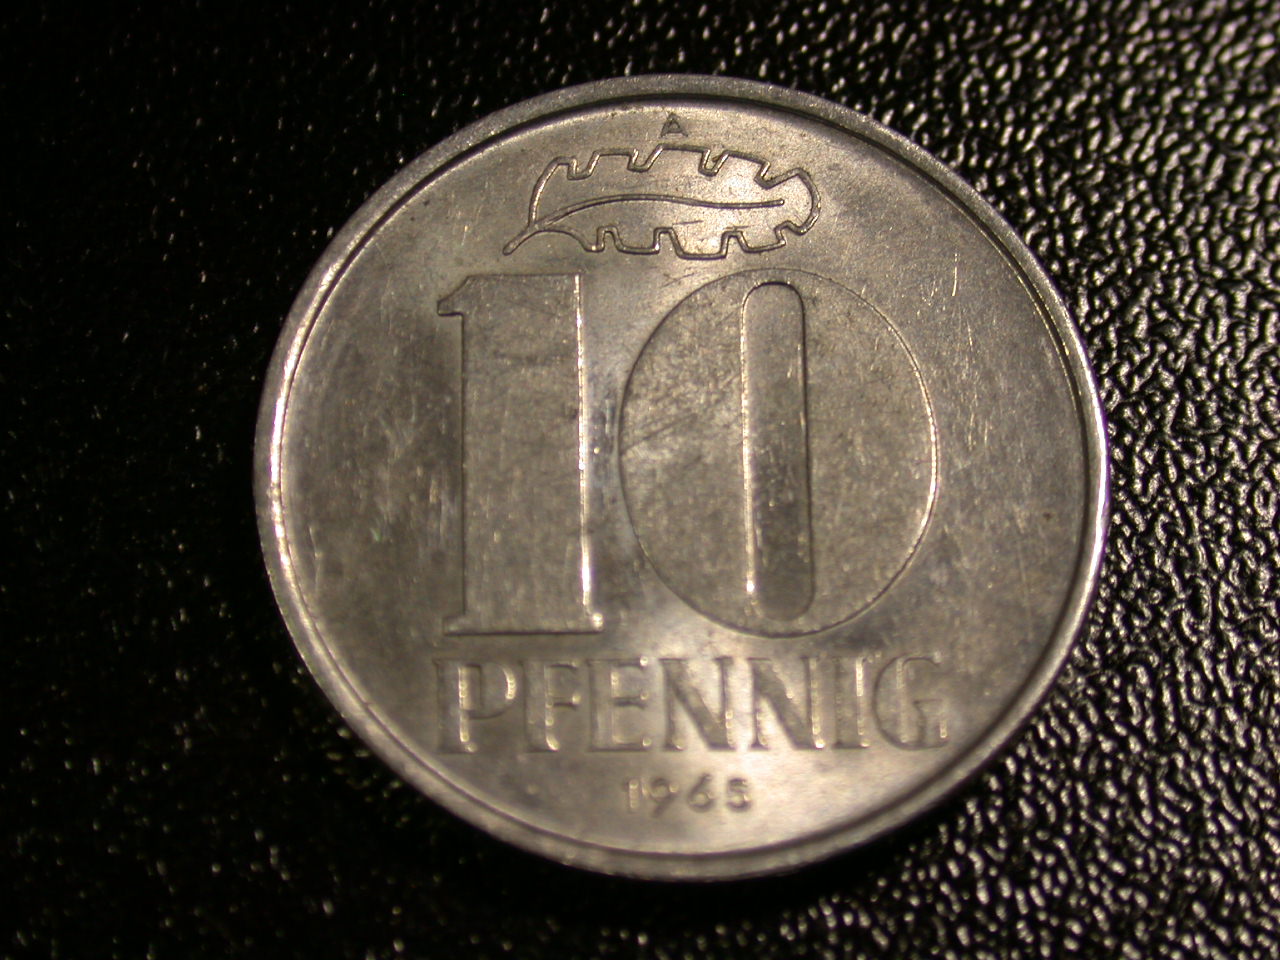  12045  DDR   10 Pfennig  1965  in vz-st   